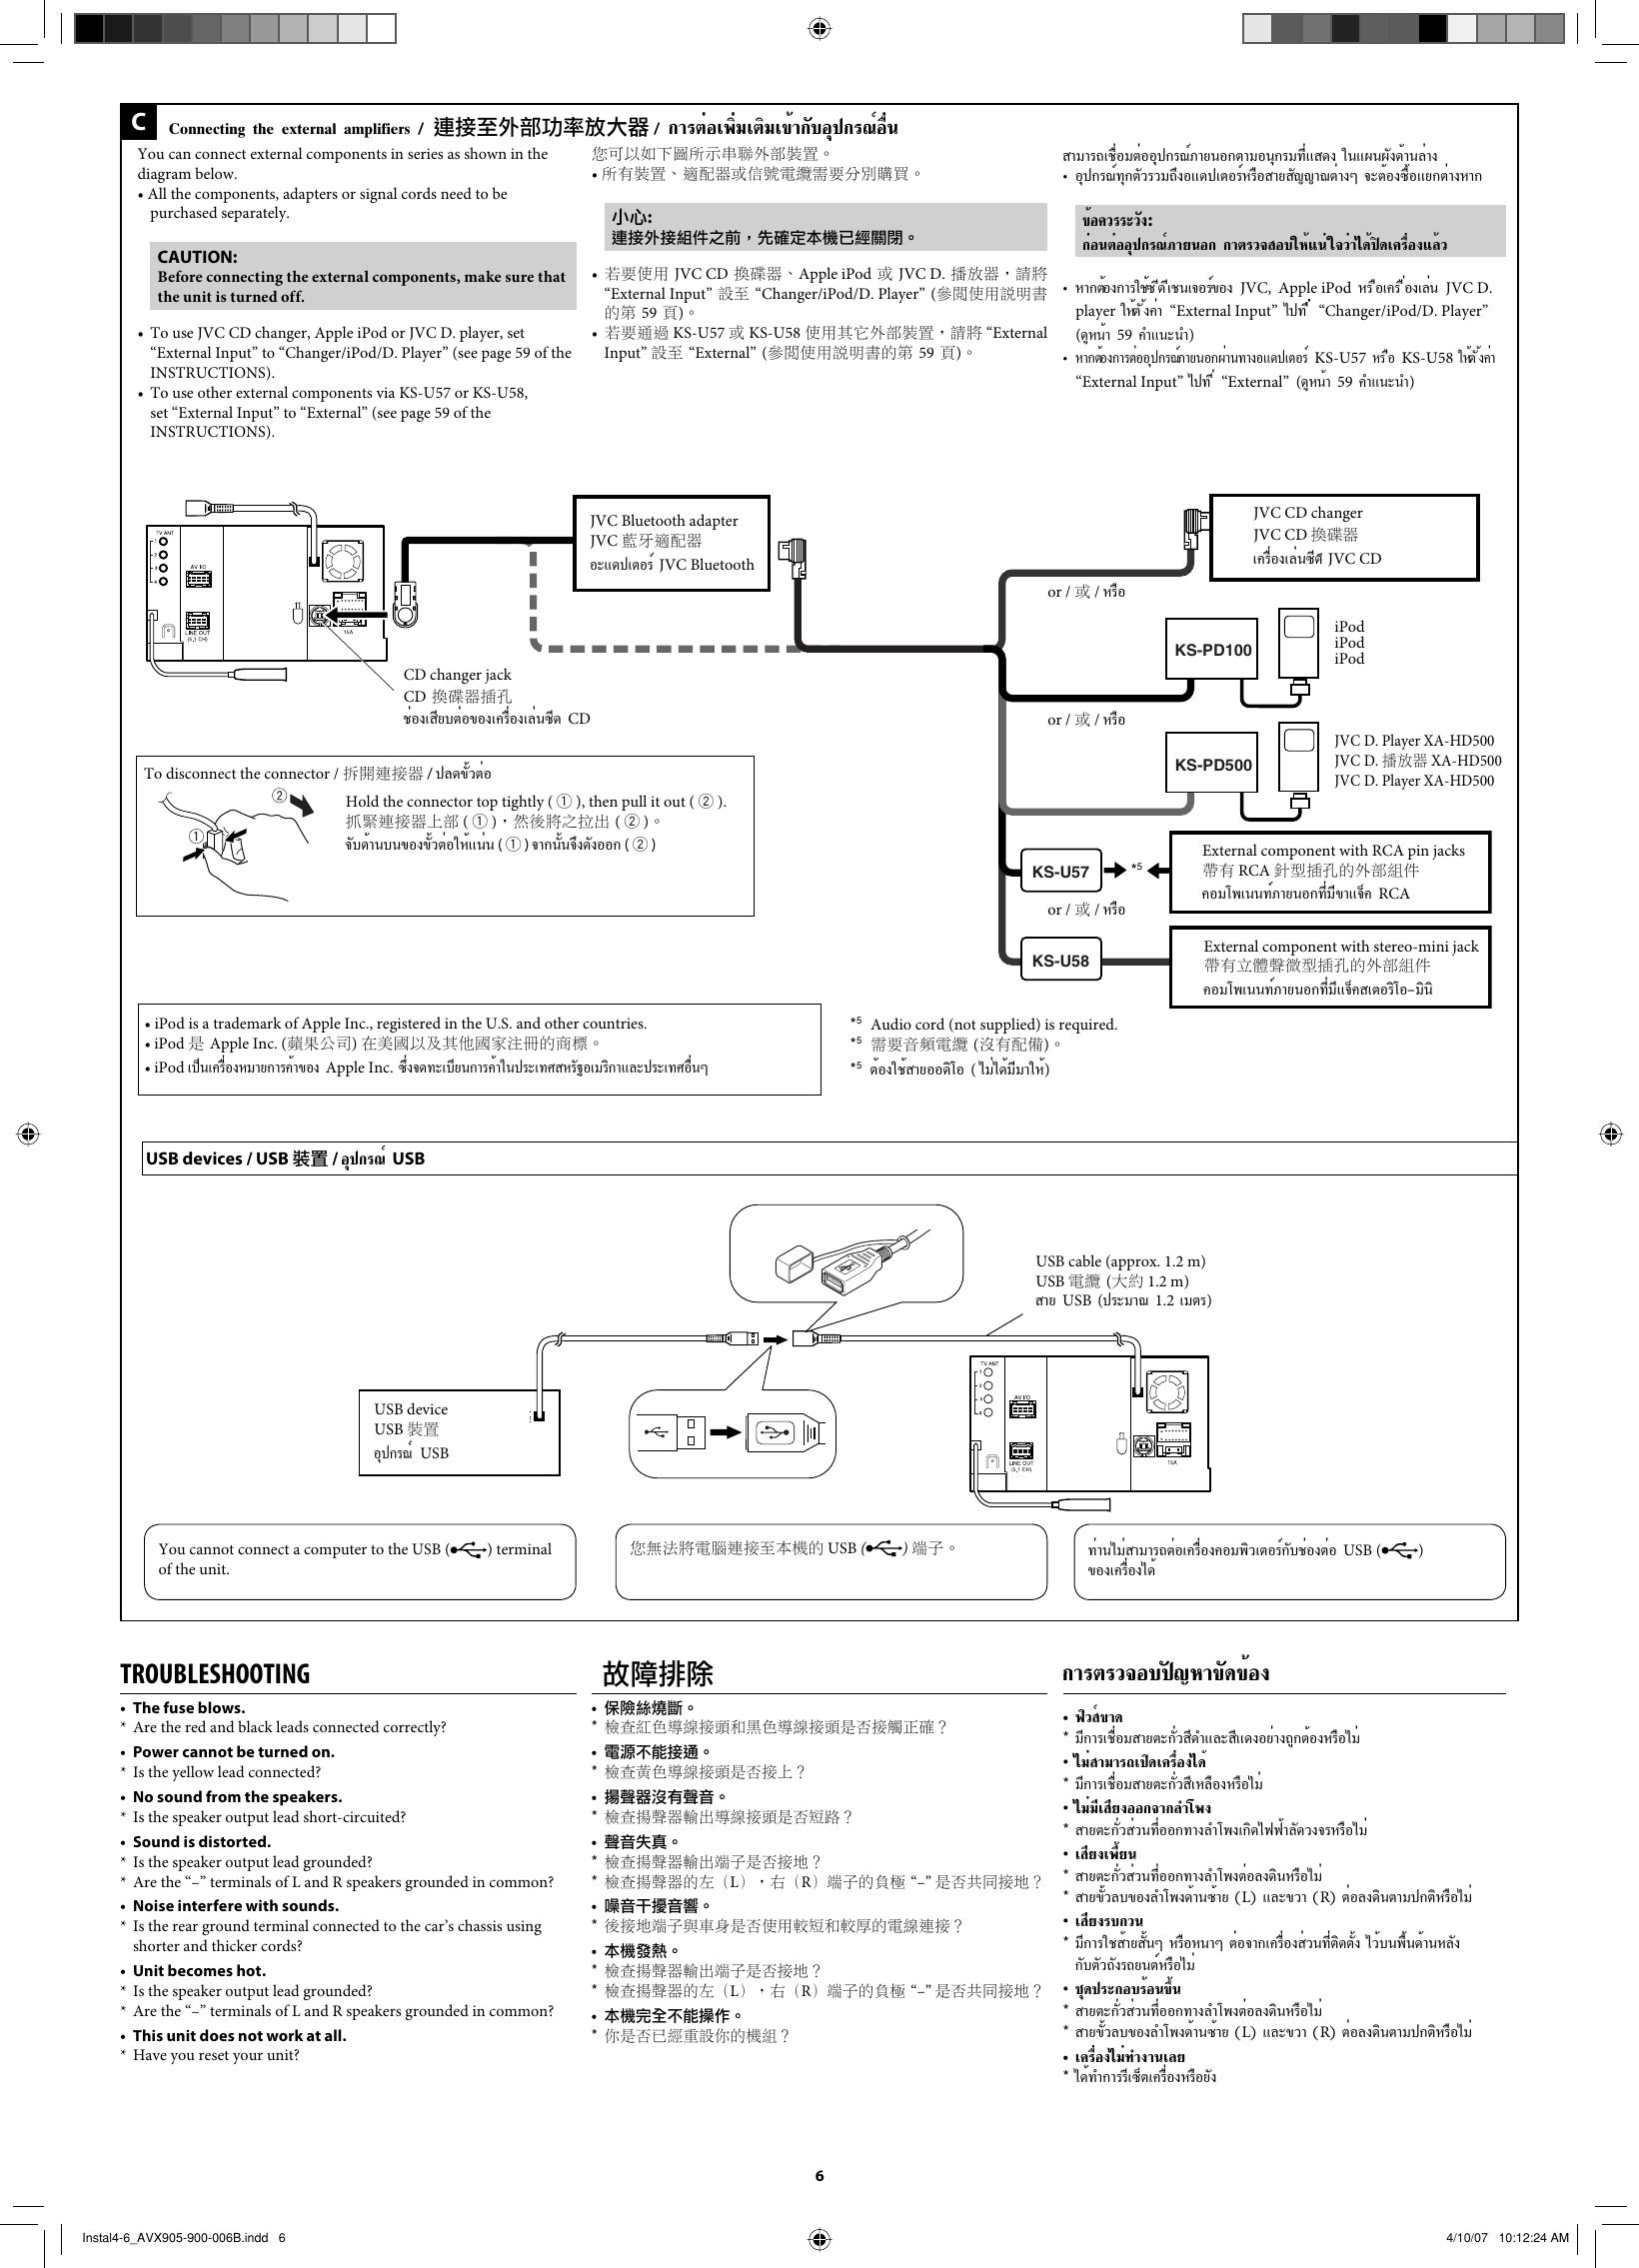 Page 6 of 6 - JVC KW-AVX900U KW-AVX905/KW-AVX900[U] User Manual KW-AVX900U, KW-AVX905U LVT1670-006B